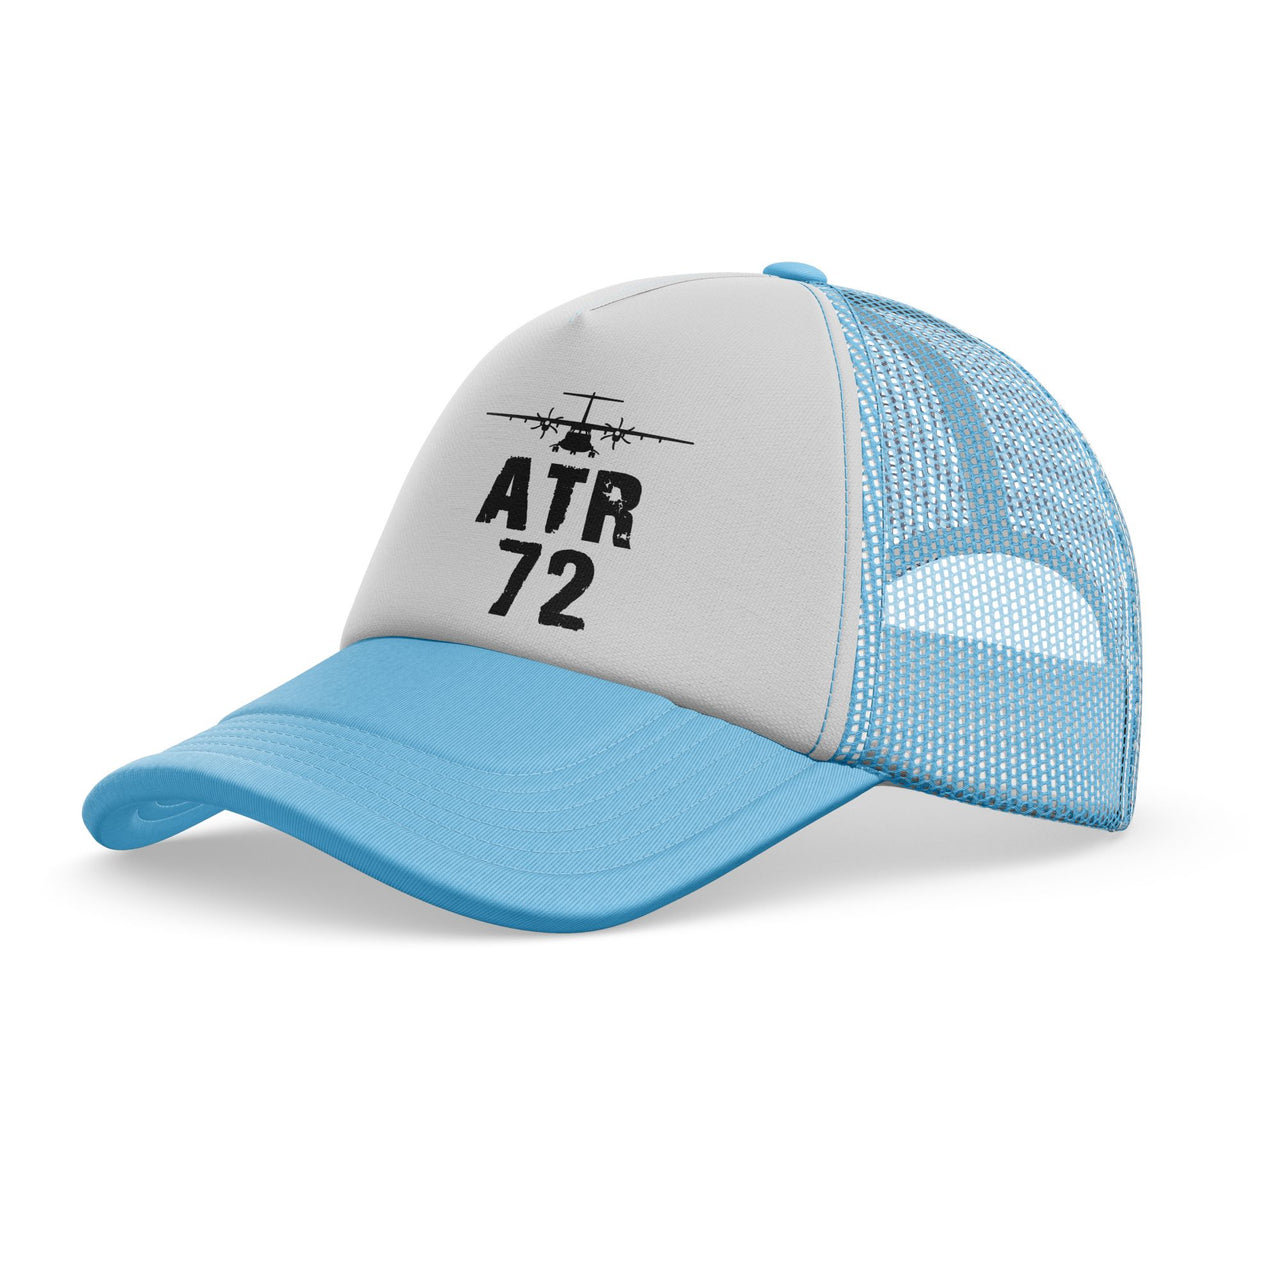 ATR-72 & Plane Designed Trucker Caps & Hats